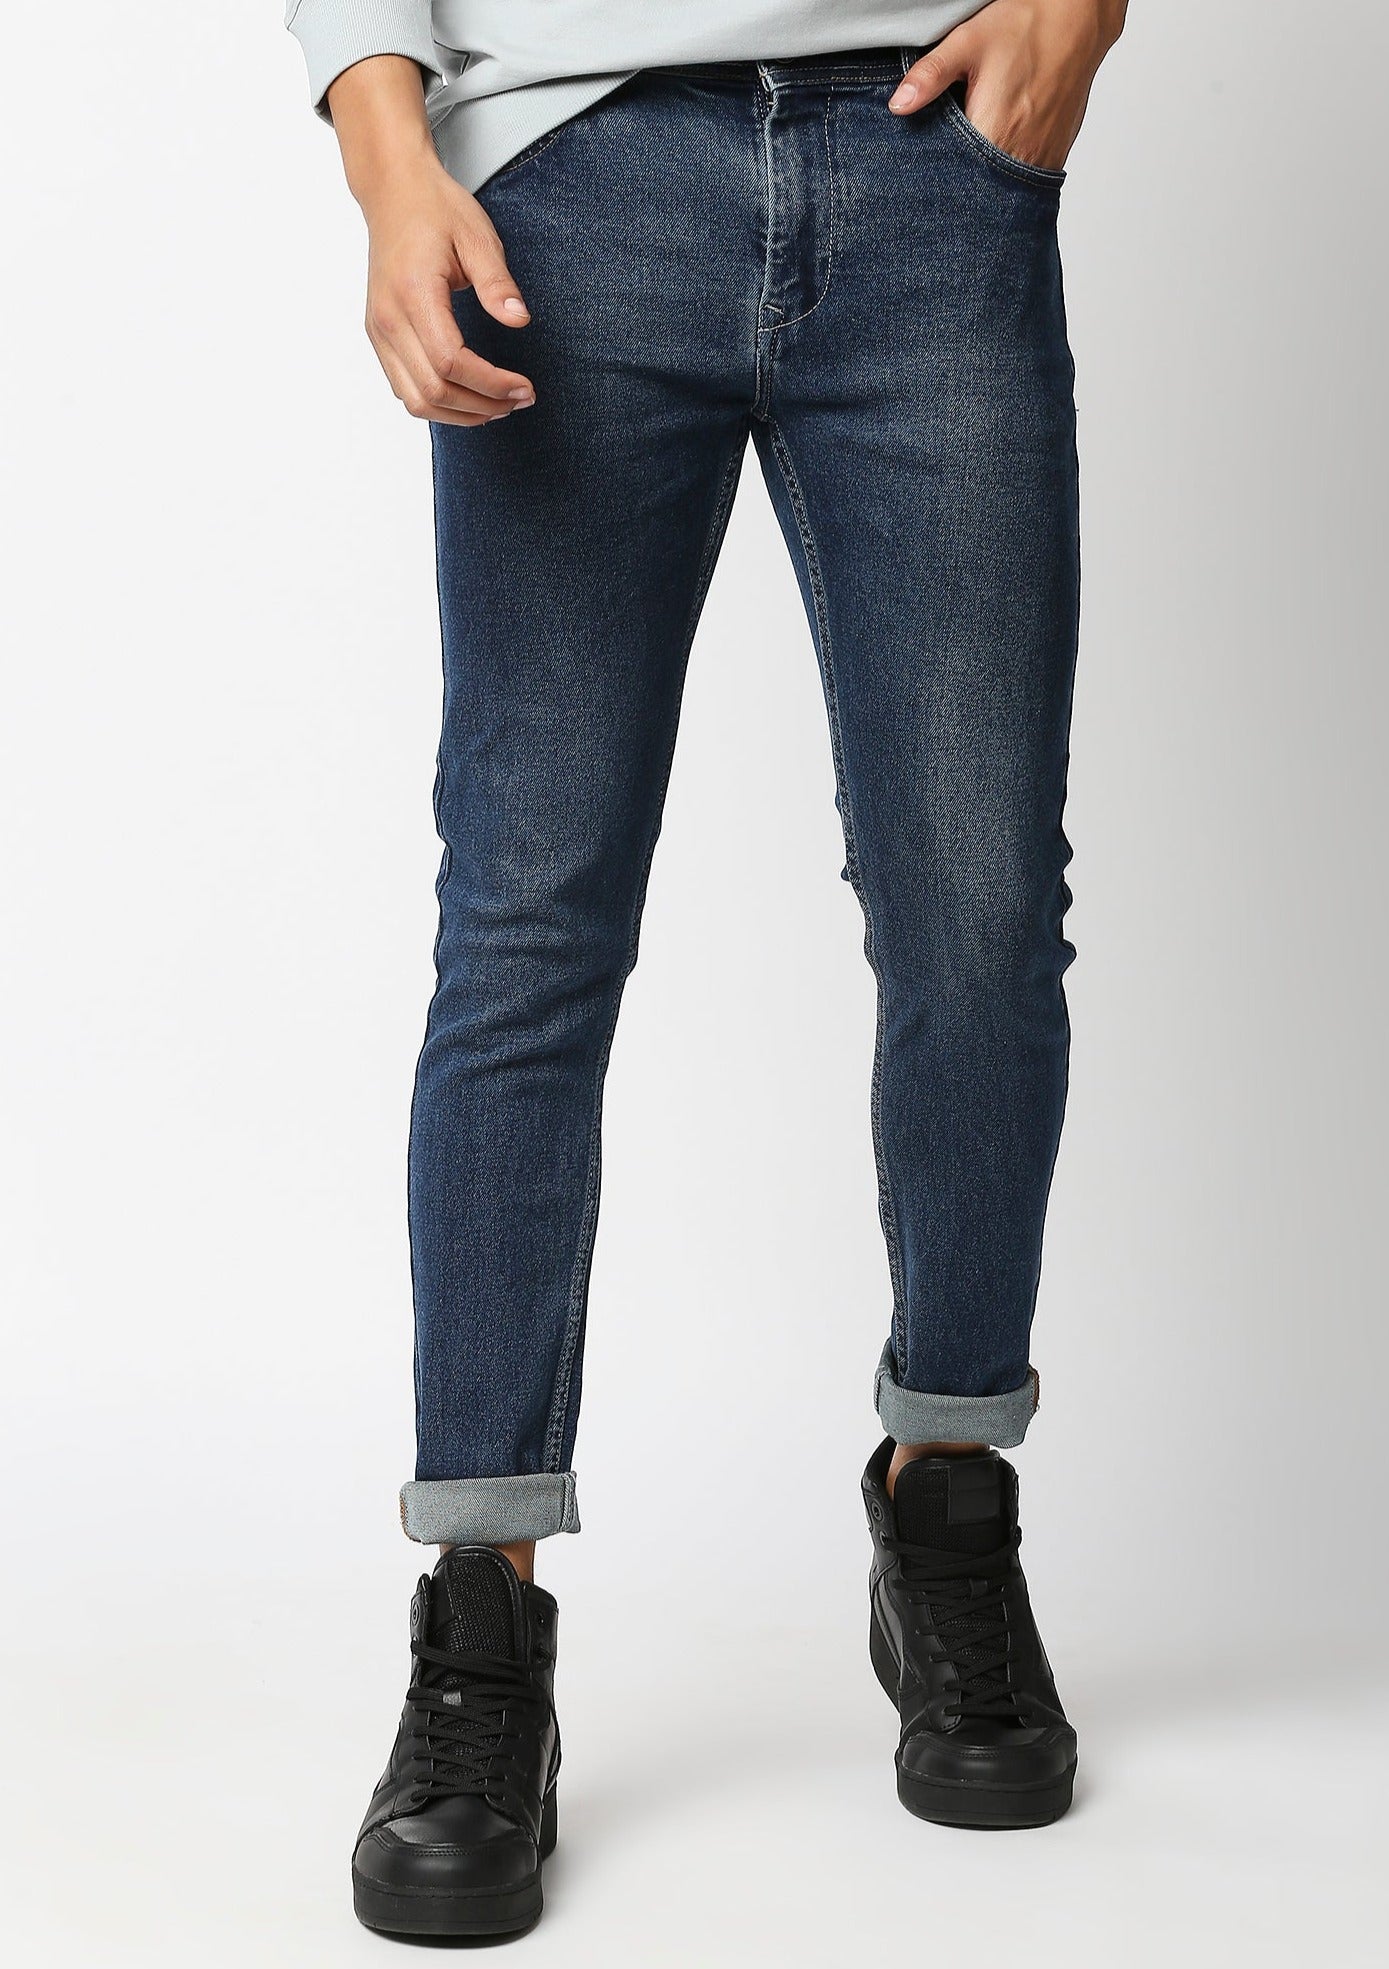 Fostino Dark Blue Washed Jeans - Fostino Pants